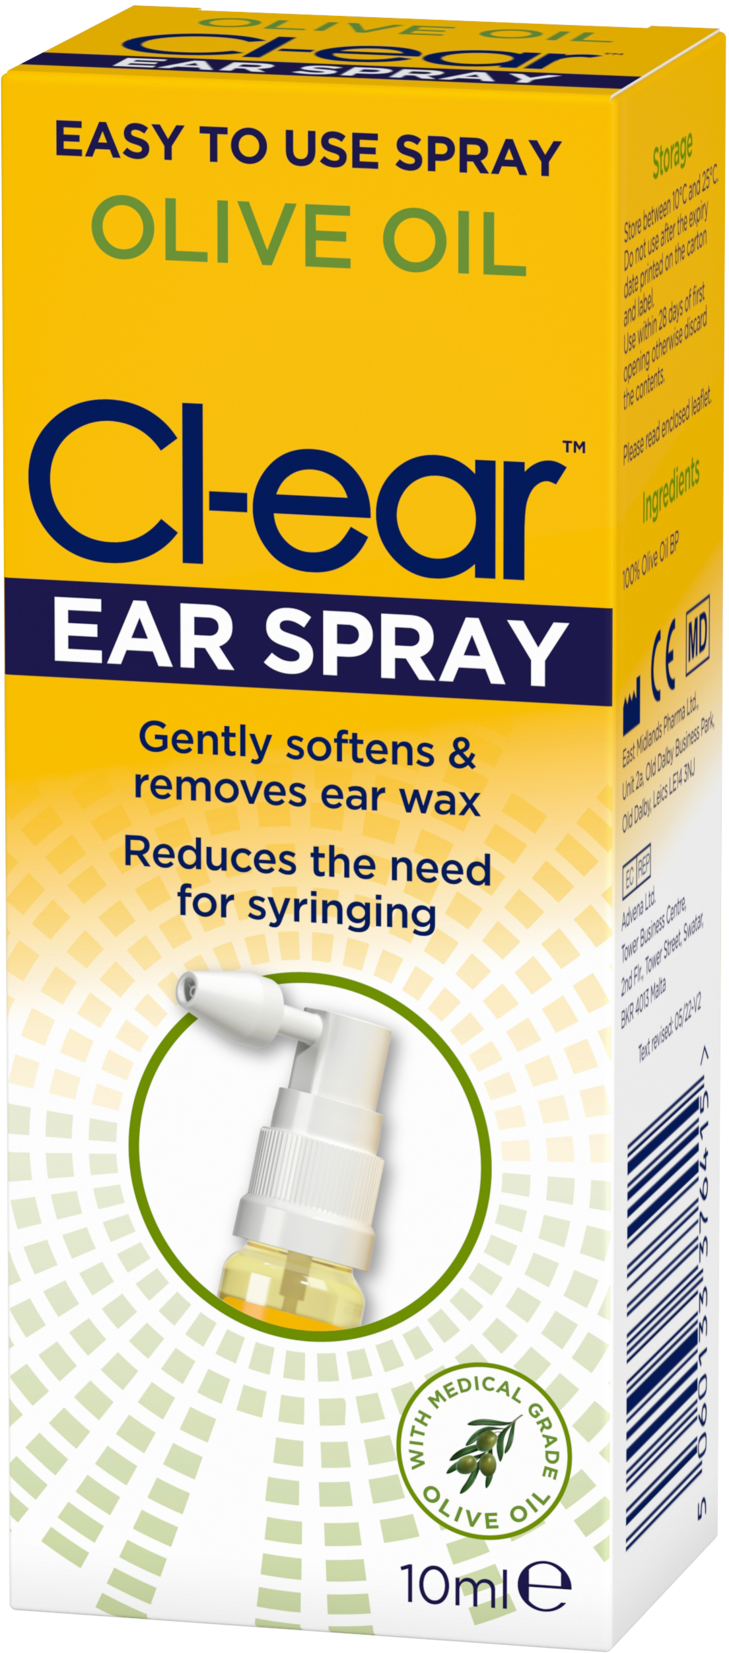 Cl-ear olive oil ear spray offers at £549 in Lloyds Pharmacy